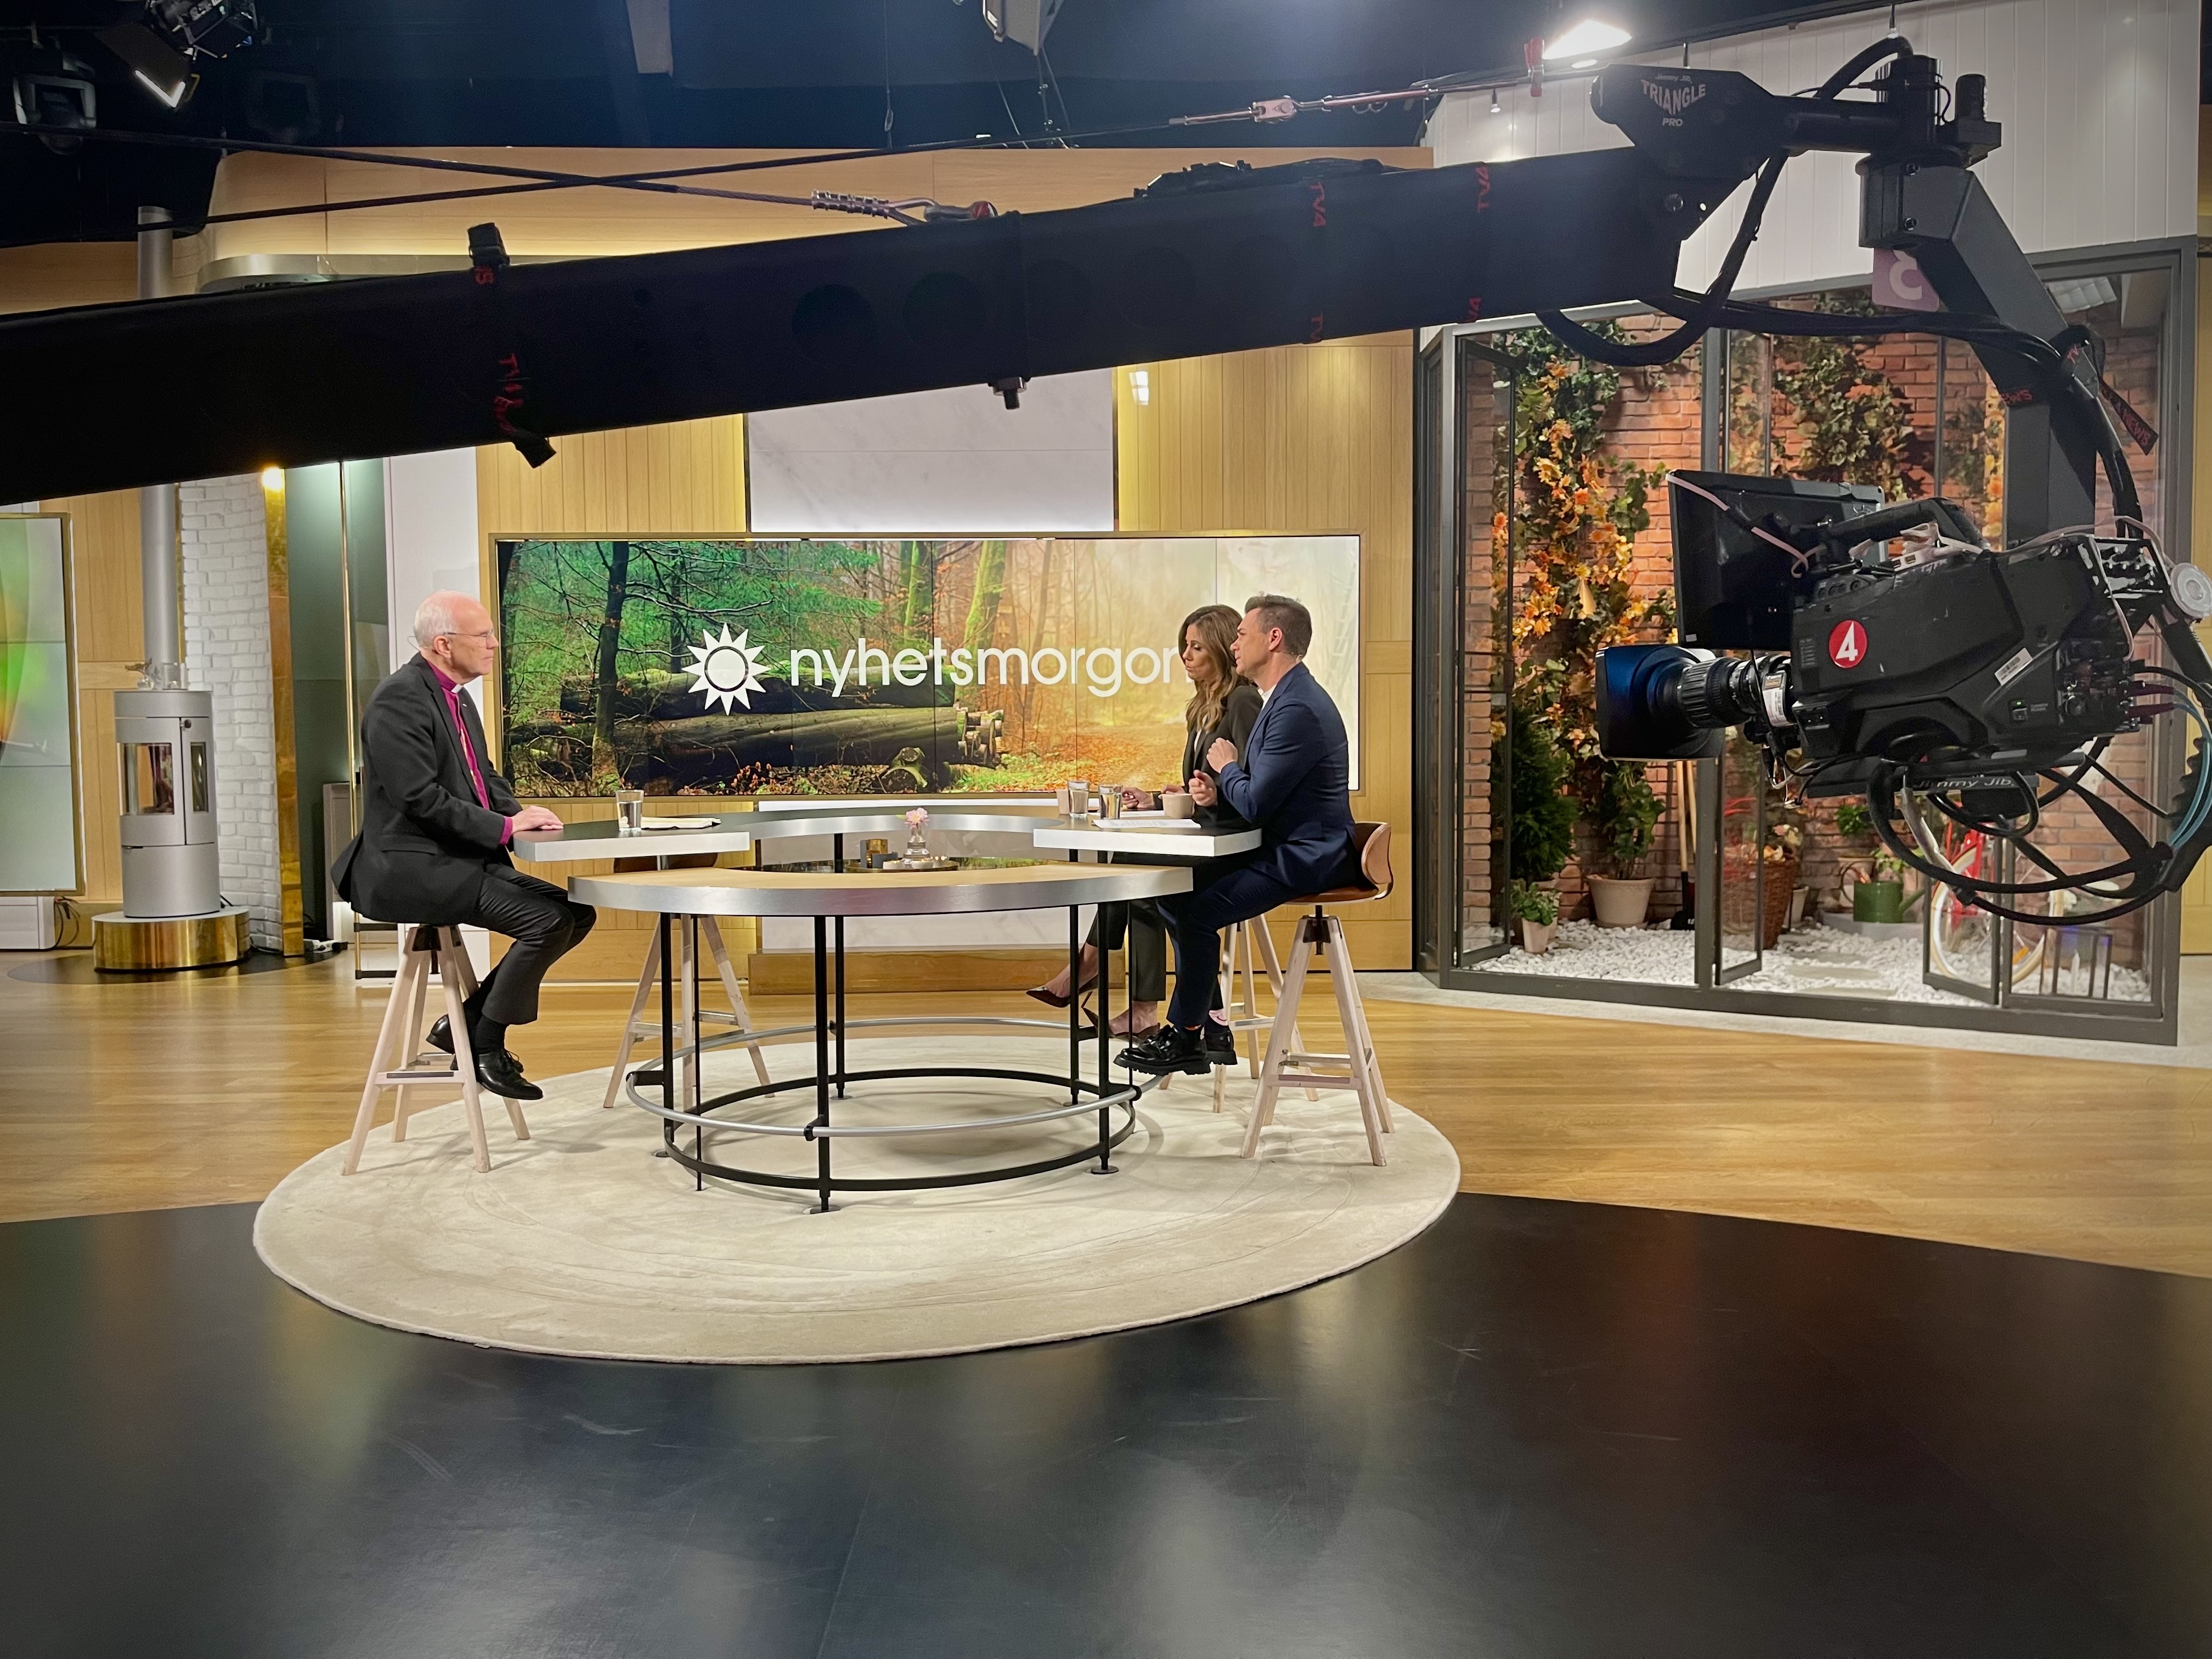 Ärkebiskop Martin Modéus intervjuas i en tv-studio.